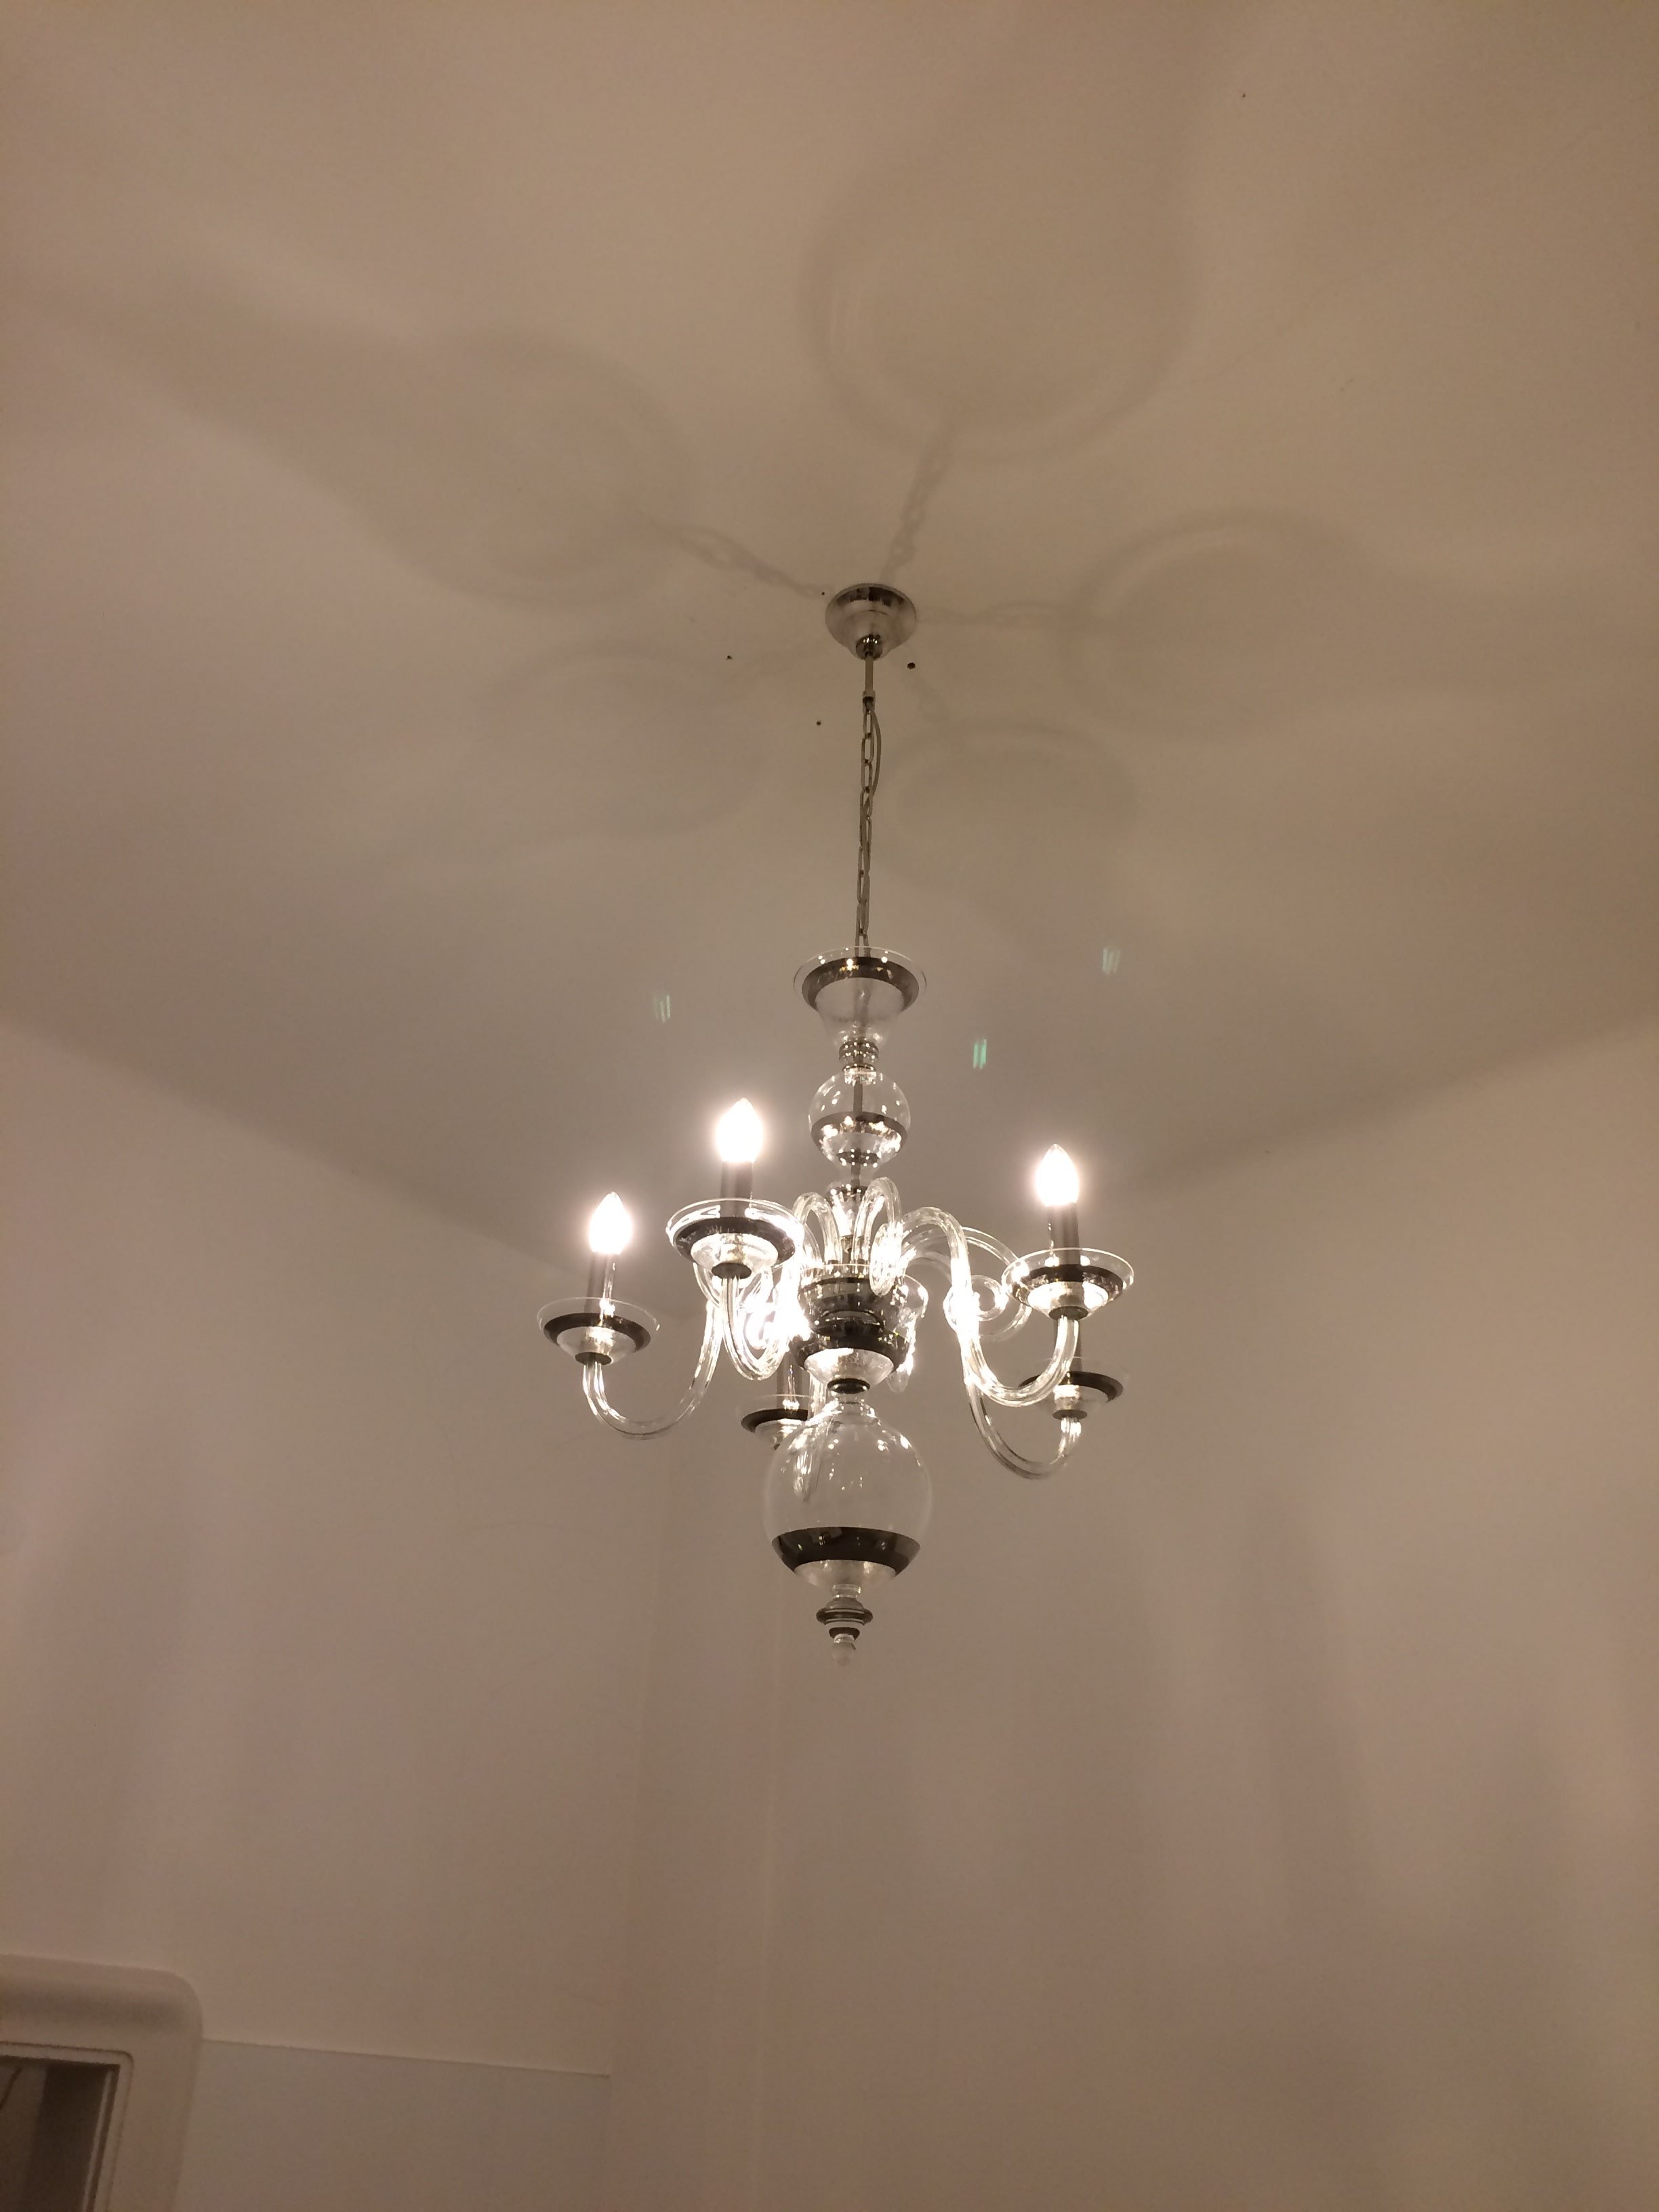 Clerius-chandelier-in-interior-1.JPG